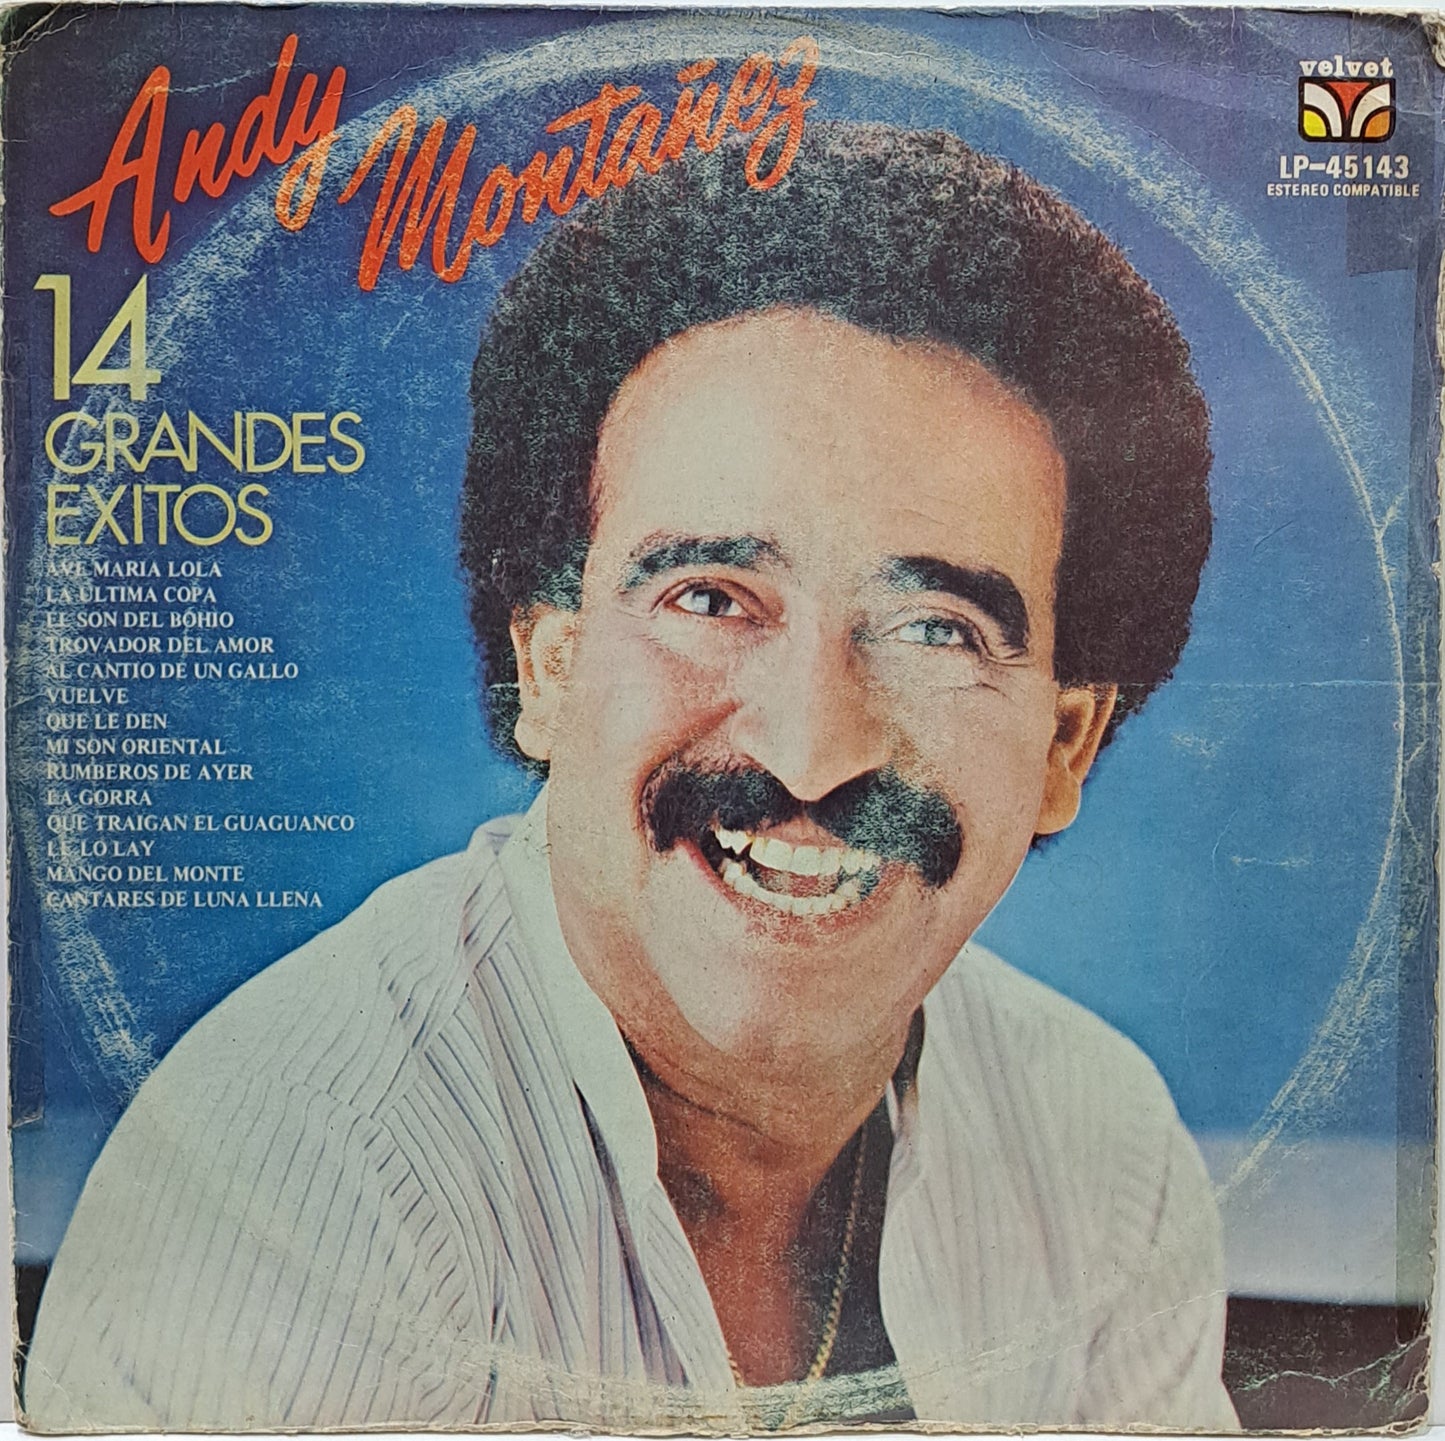 ANDY MONTAÑEZ - 14 GRANDES EXITOS LP